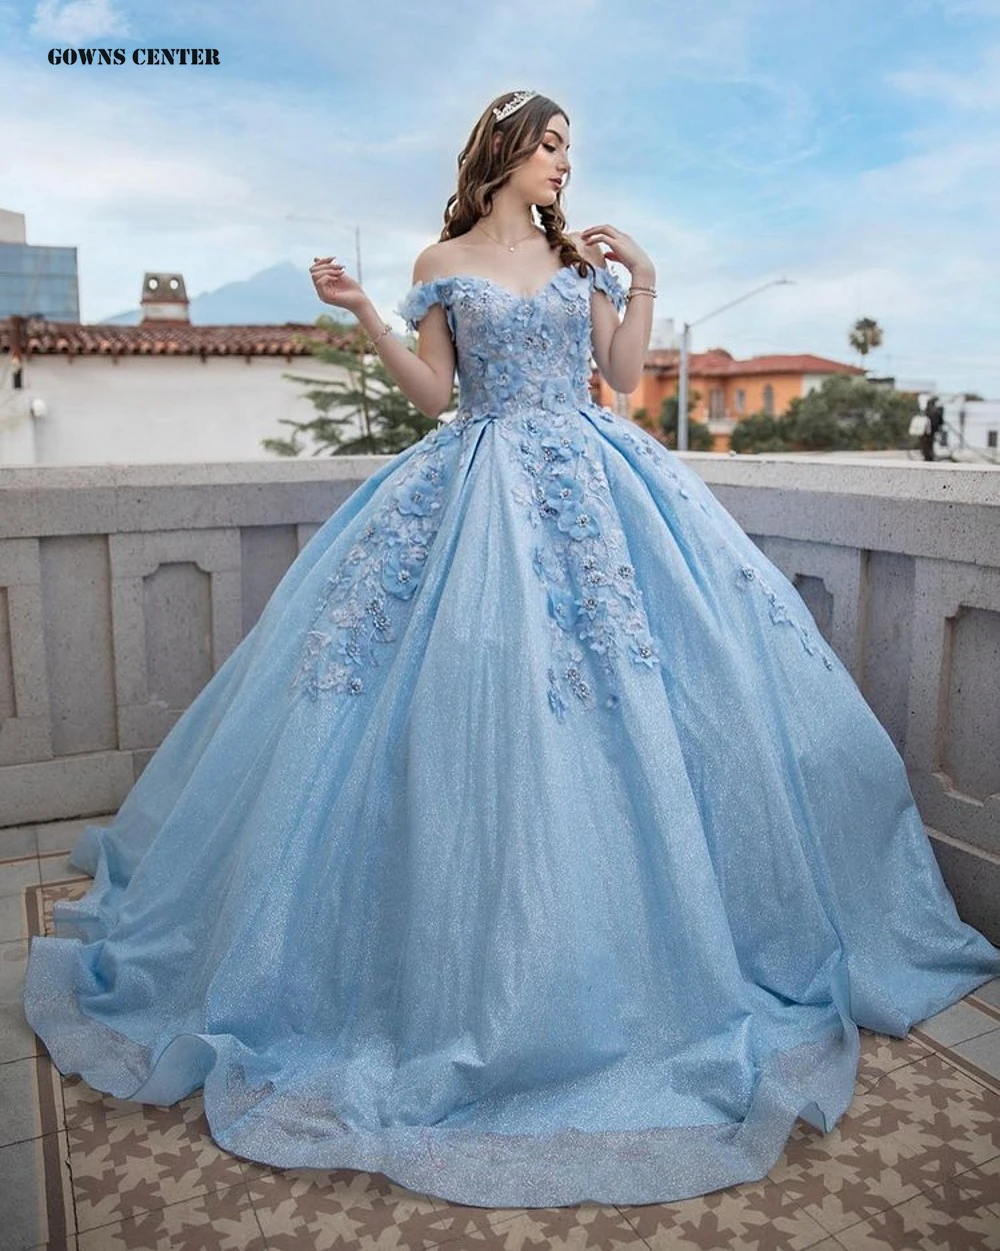 Sky Blue Ball Gown Graduations Quinceanera Dresses Sleeveless Princess Sweet 16 Dress Cinderella Prom Gowns vestidos de 15 años